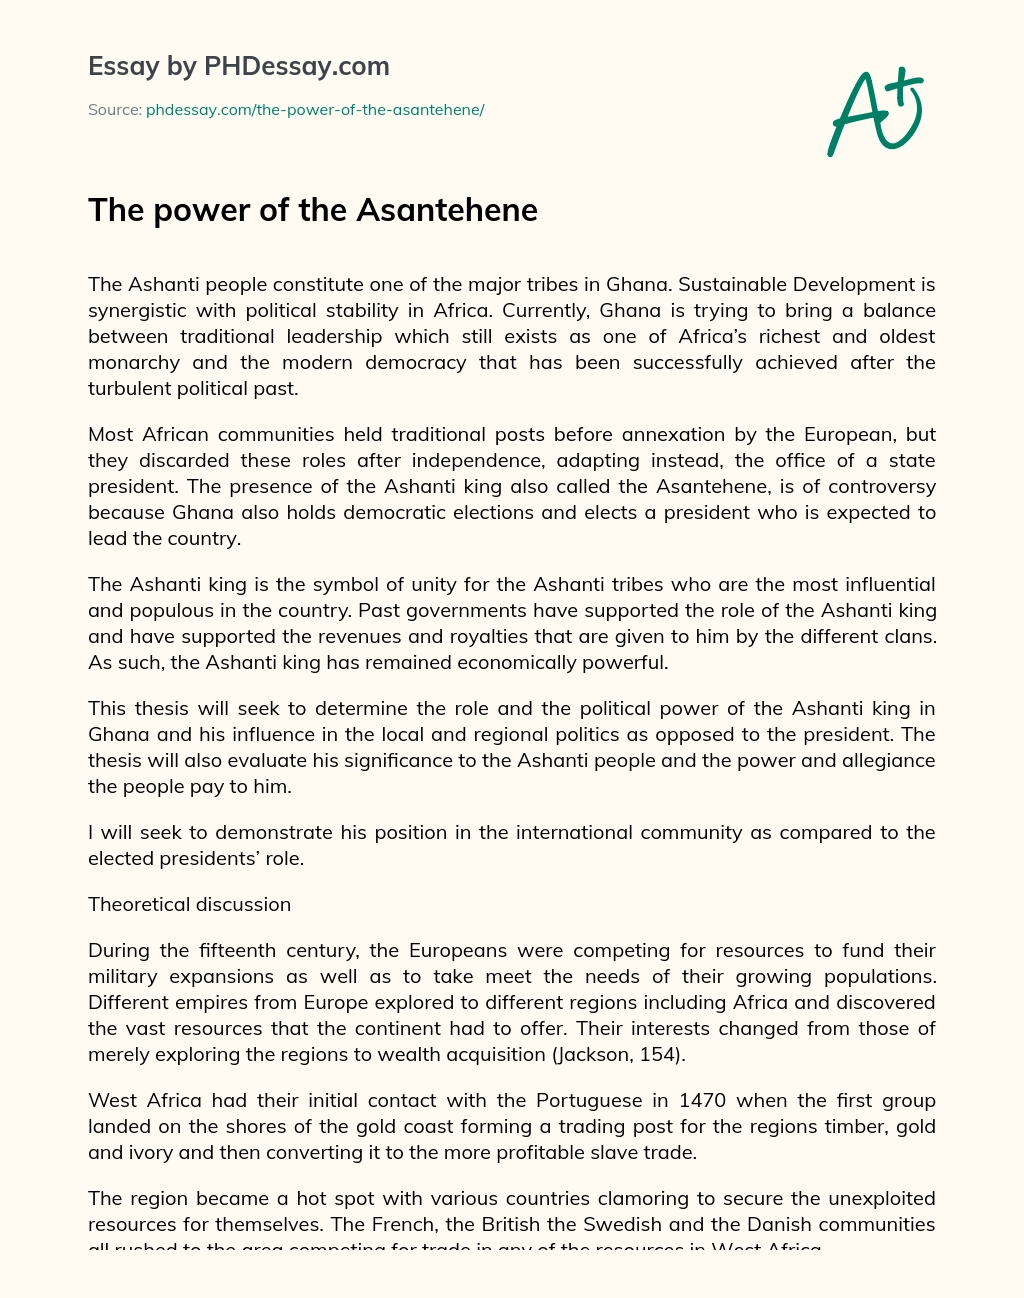 The power of the Asantehene essay